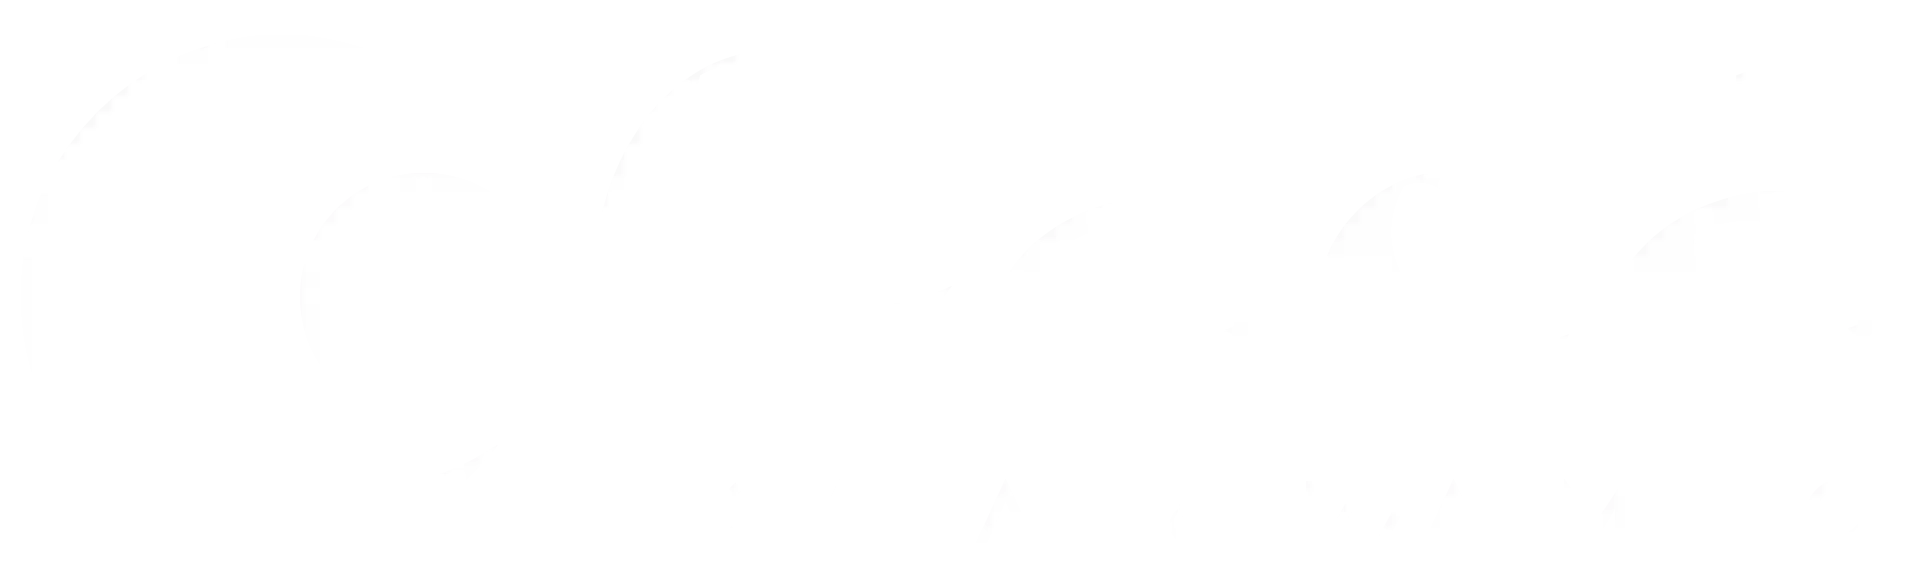 Cocò KM0 Restaurant & Pizza Gourmet